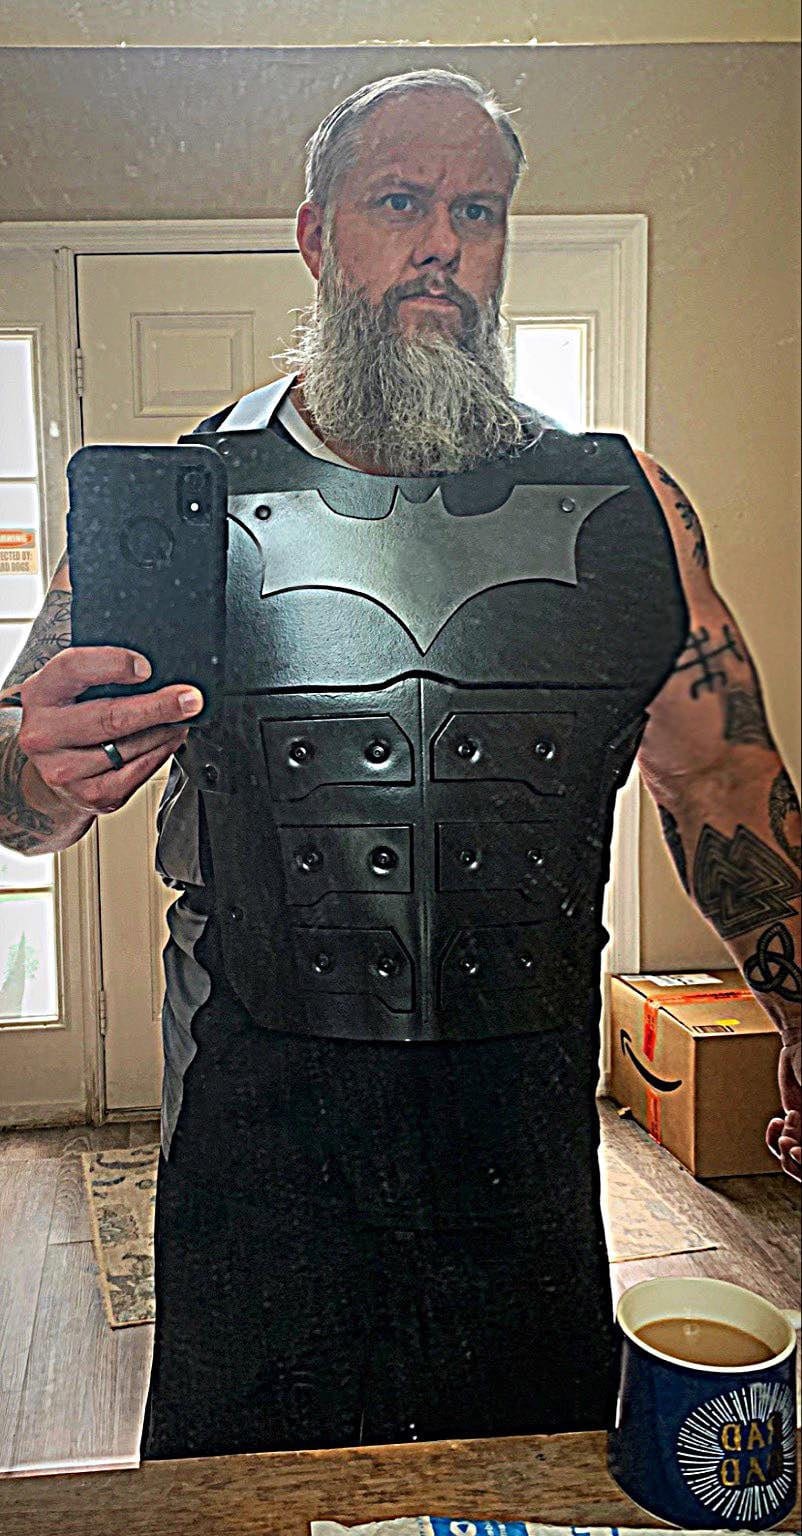 Batman chest armor Dark Knight version Gray Symbol